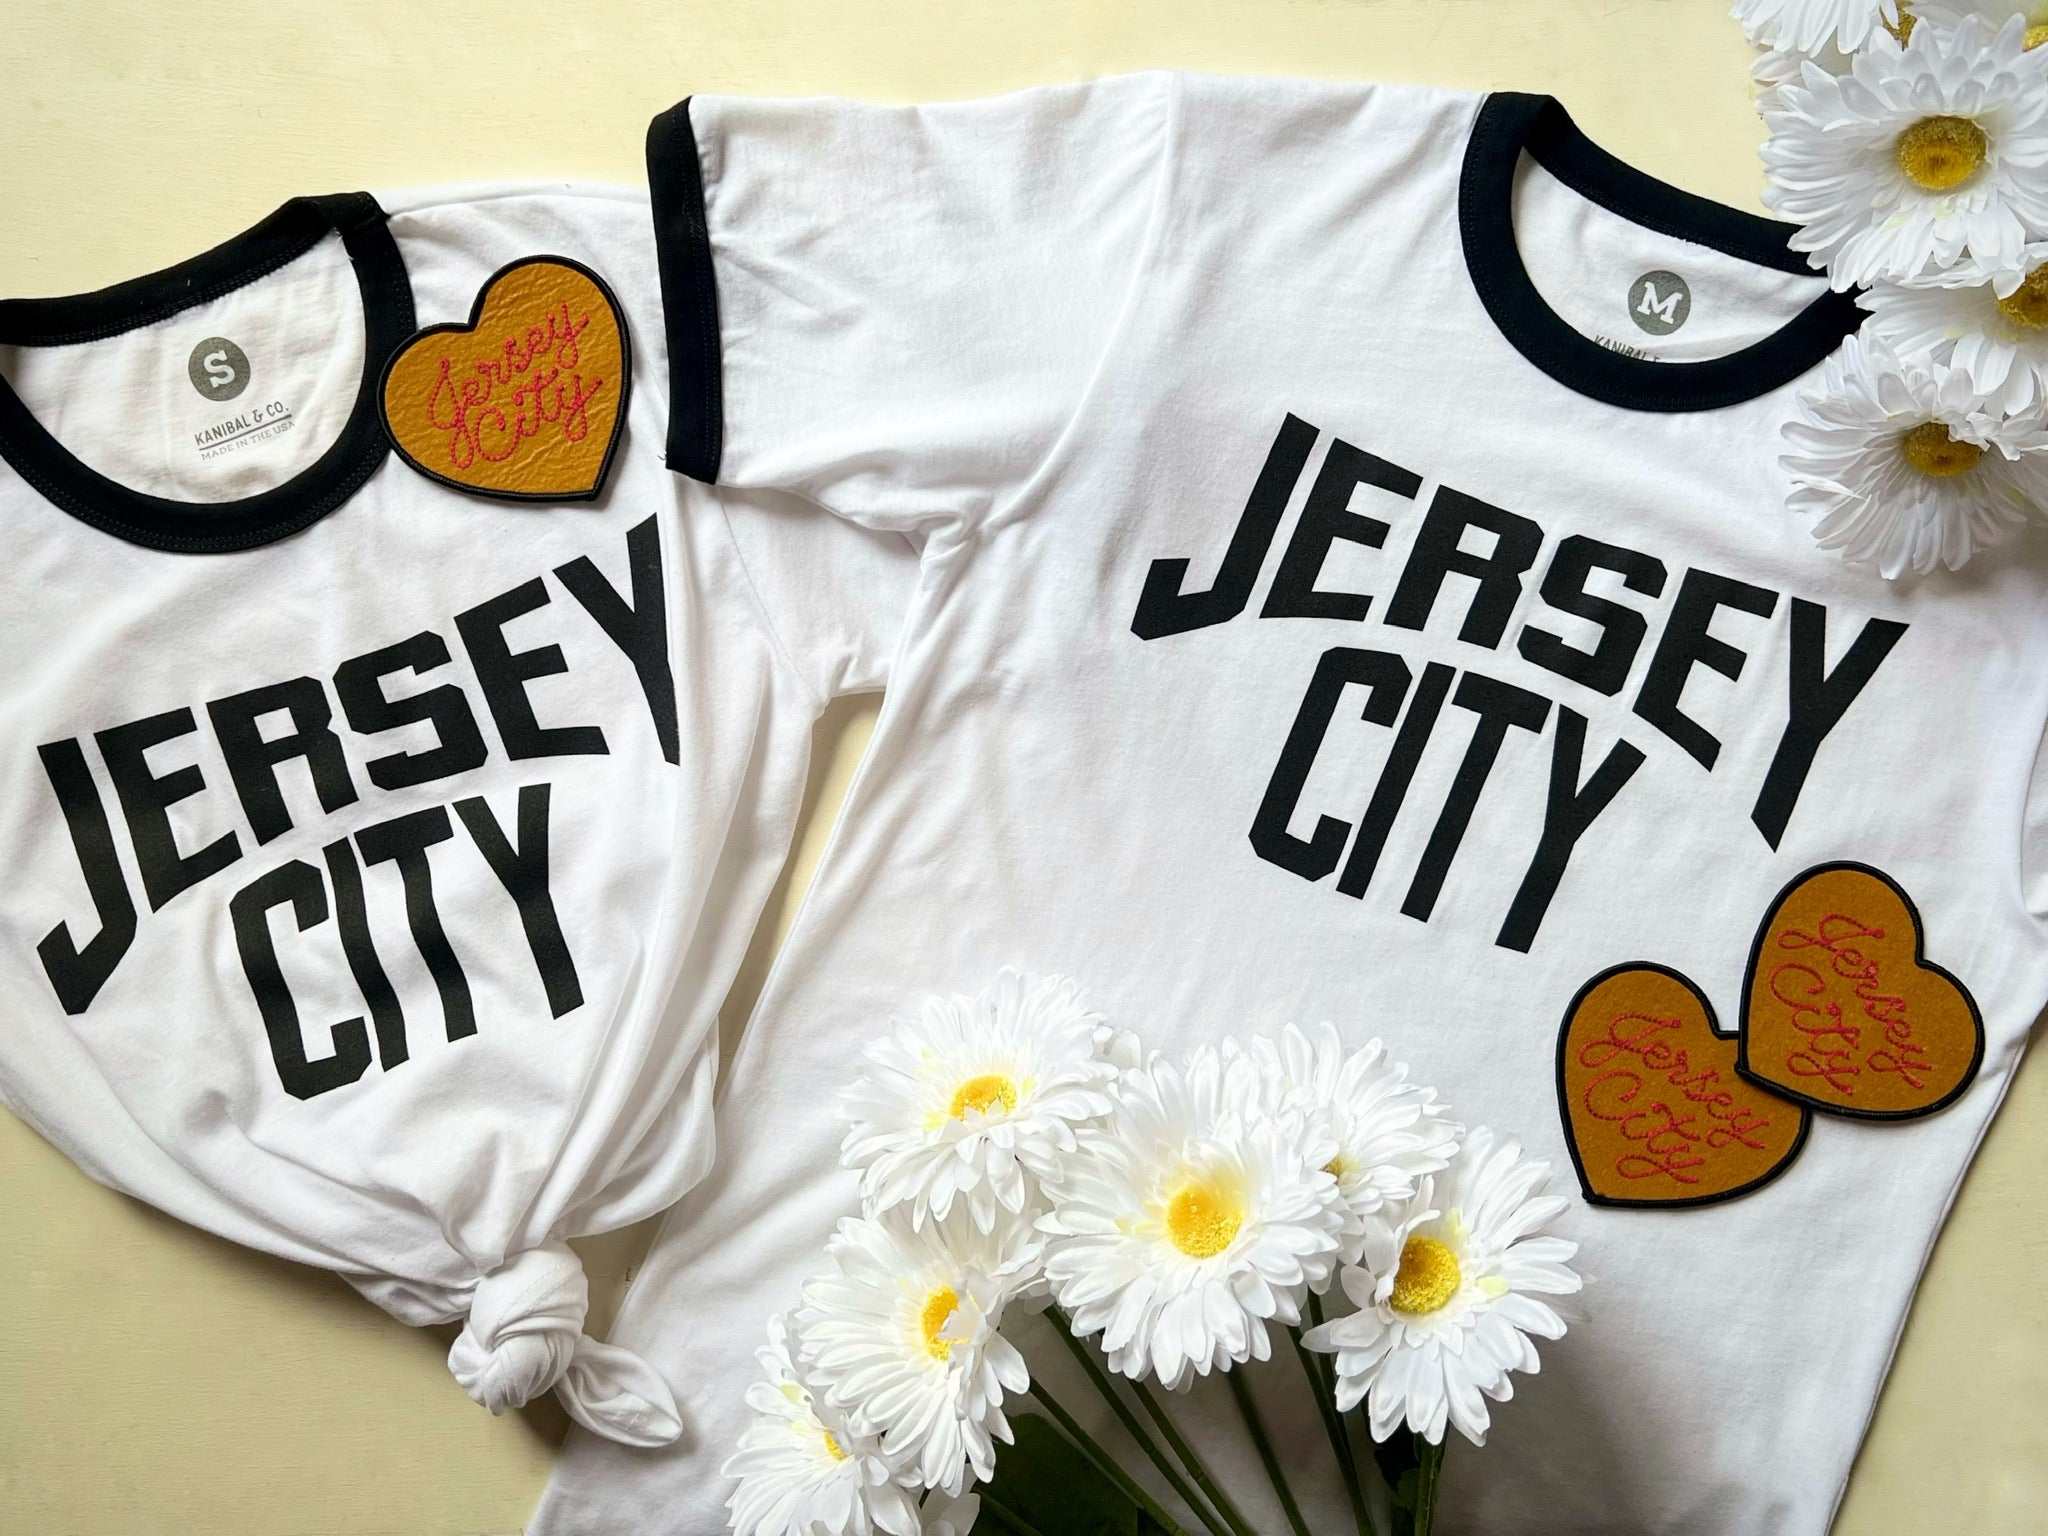 Shirt: Jersey City Ringer Tee – Kanibal & Co.